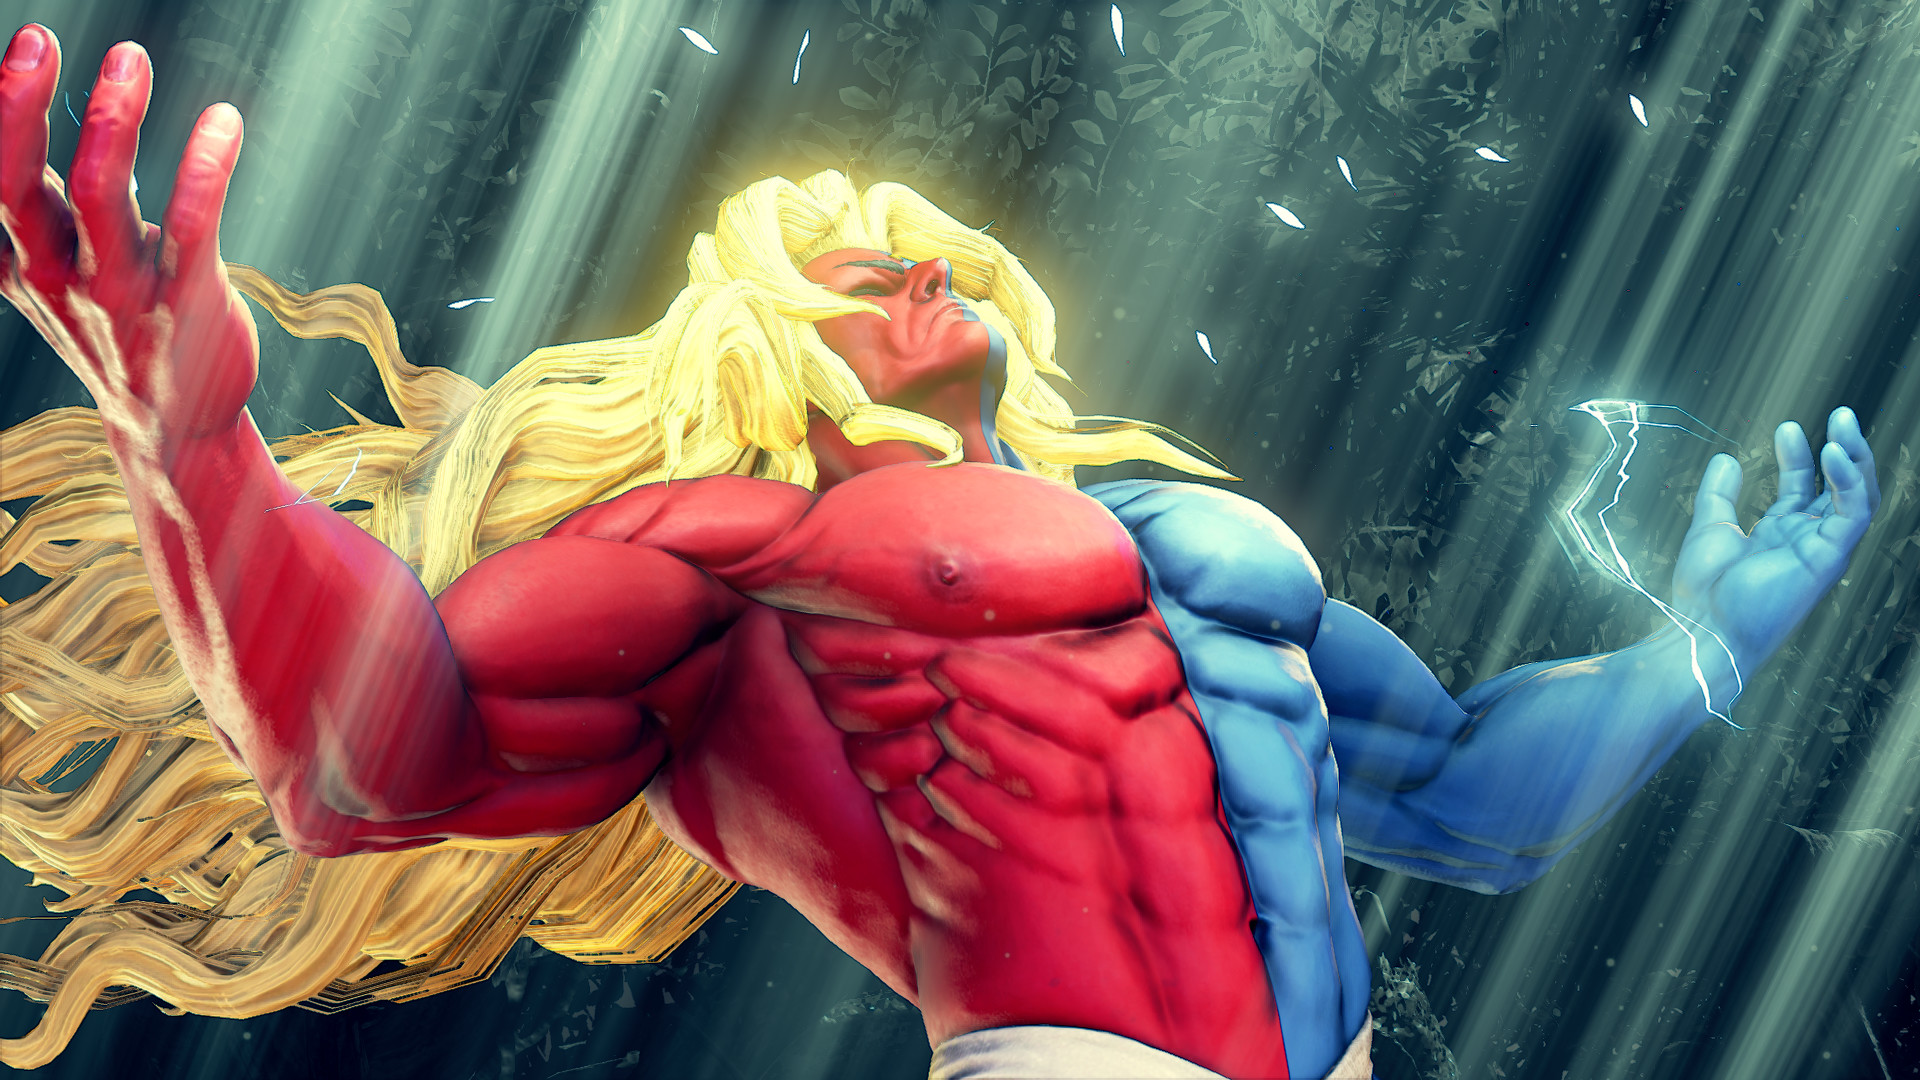 Save 50% on Street Fighter V - Champion Edition Upgrade Kit on Steam